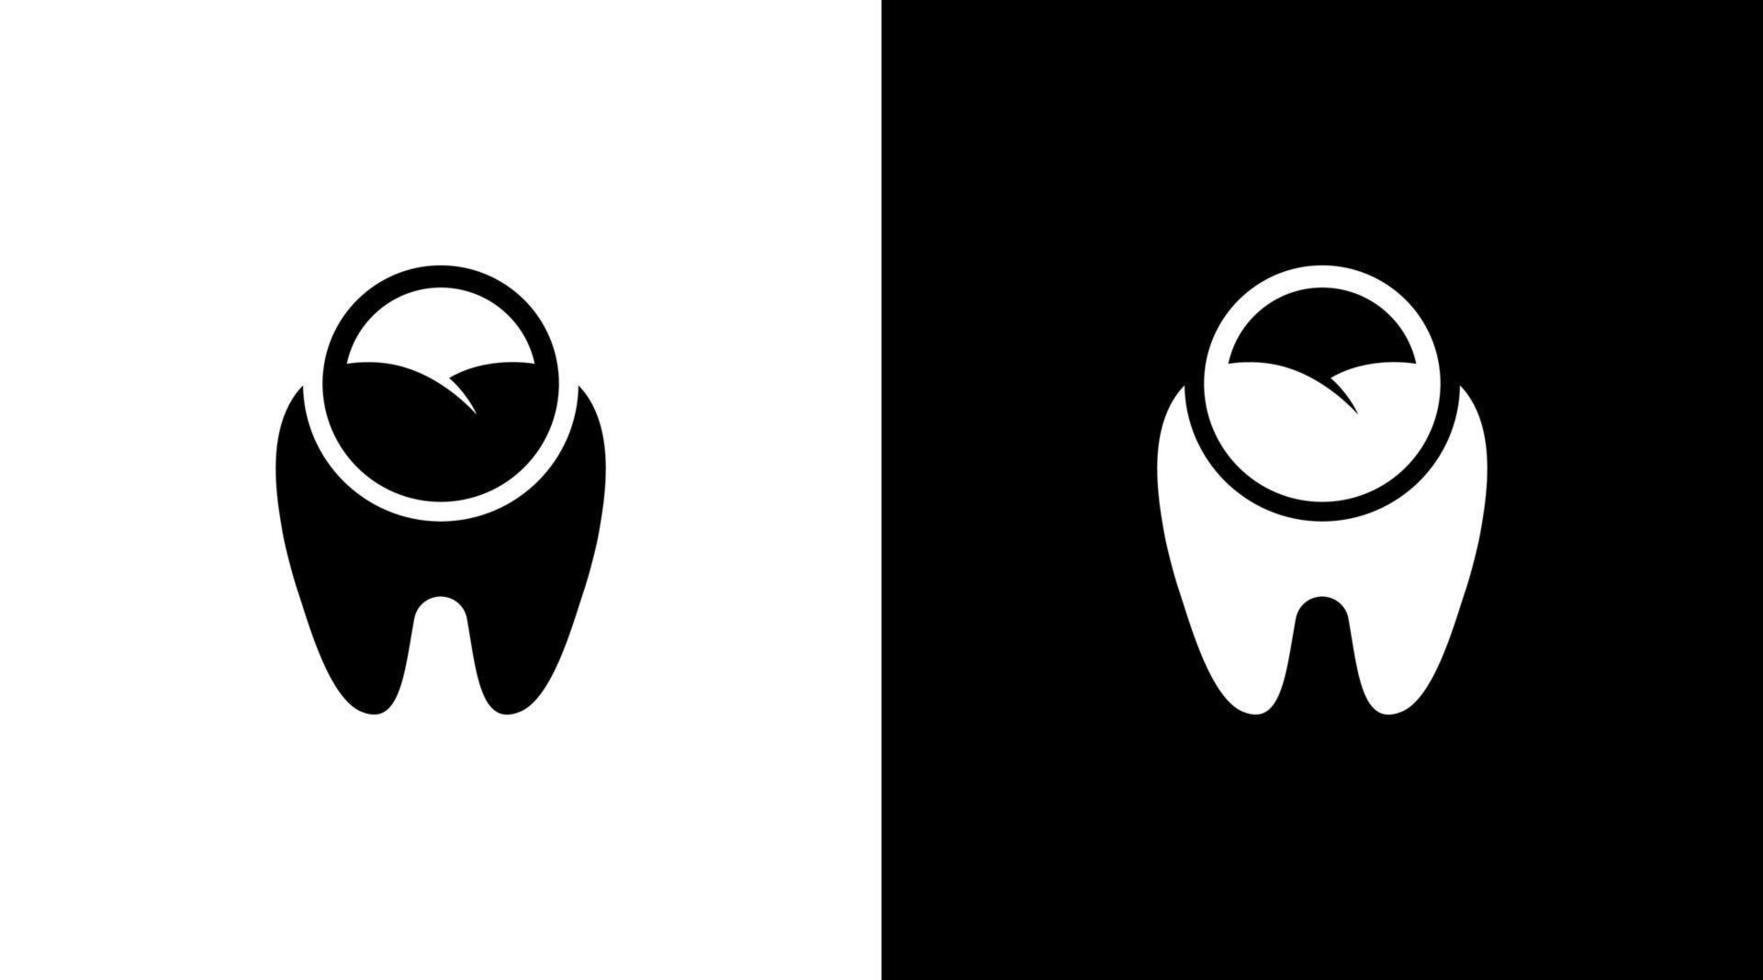 dentist logo monogram dental medical black and white icon illustration style Designs templates vector